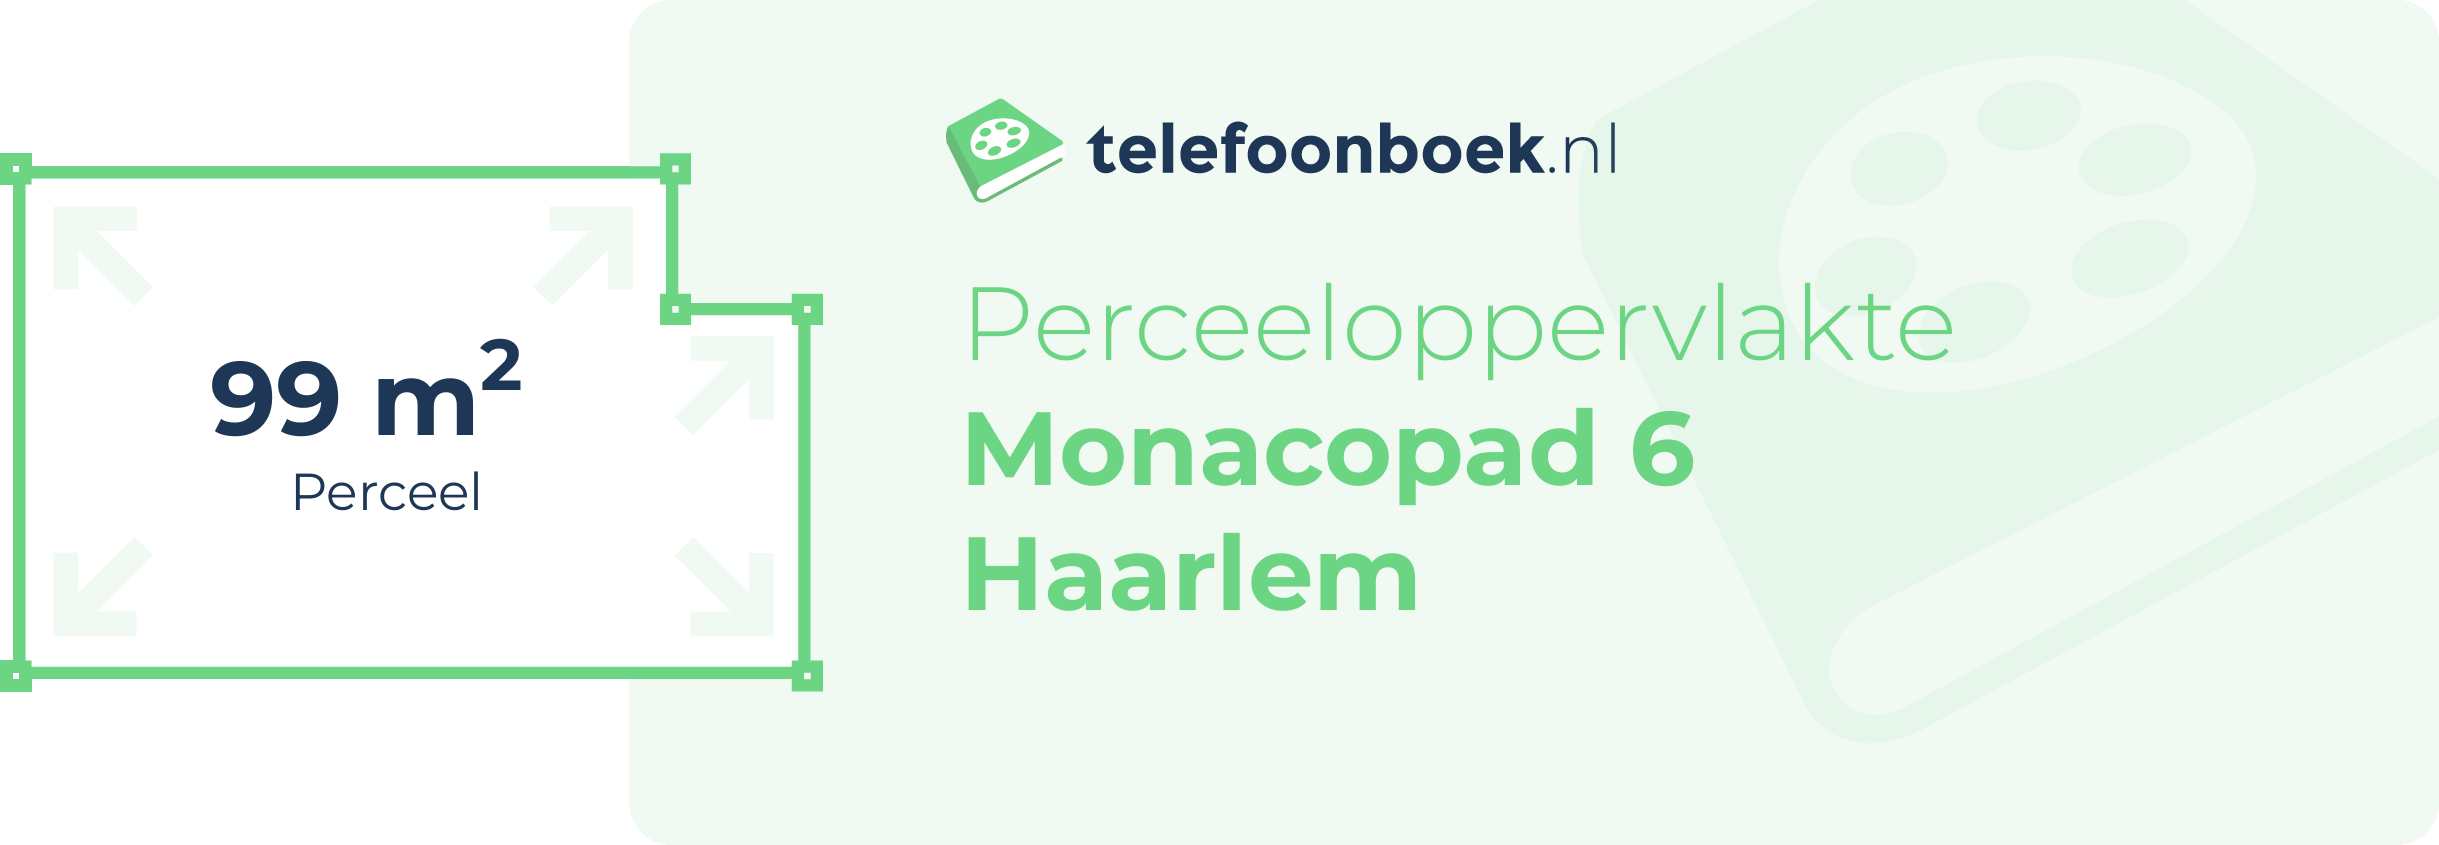 Perceeloppervlakte Monacopad 6 Haarlem